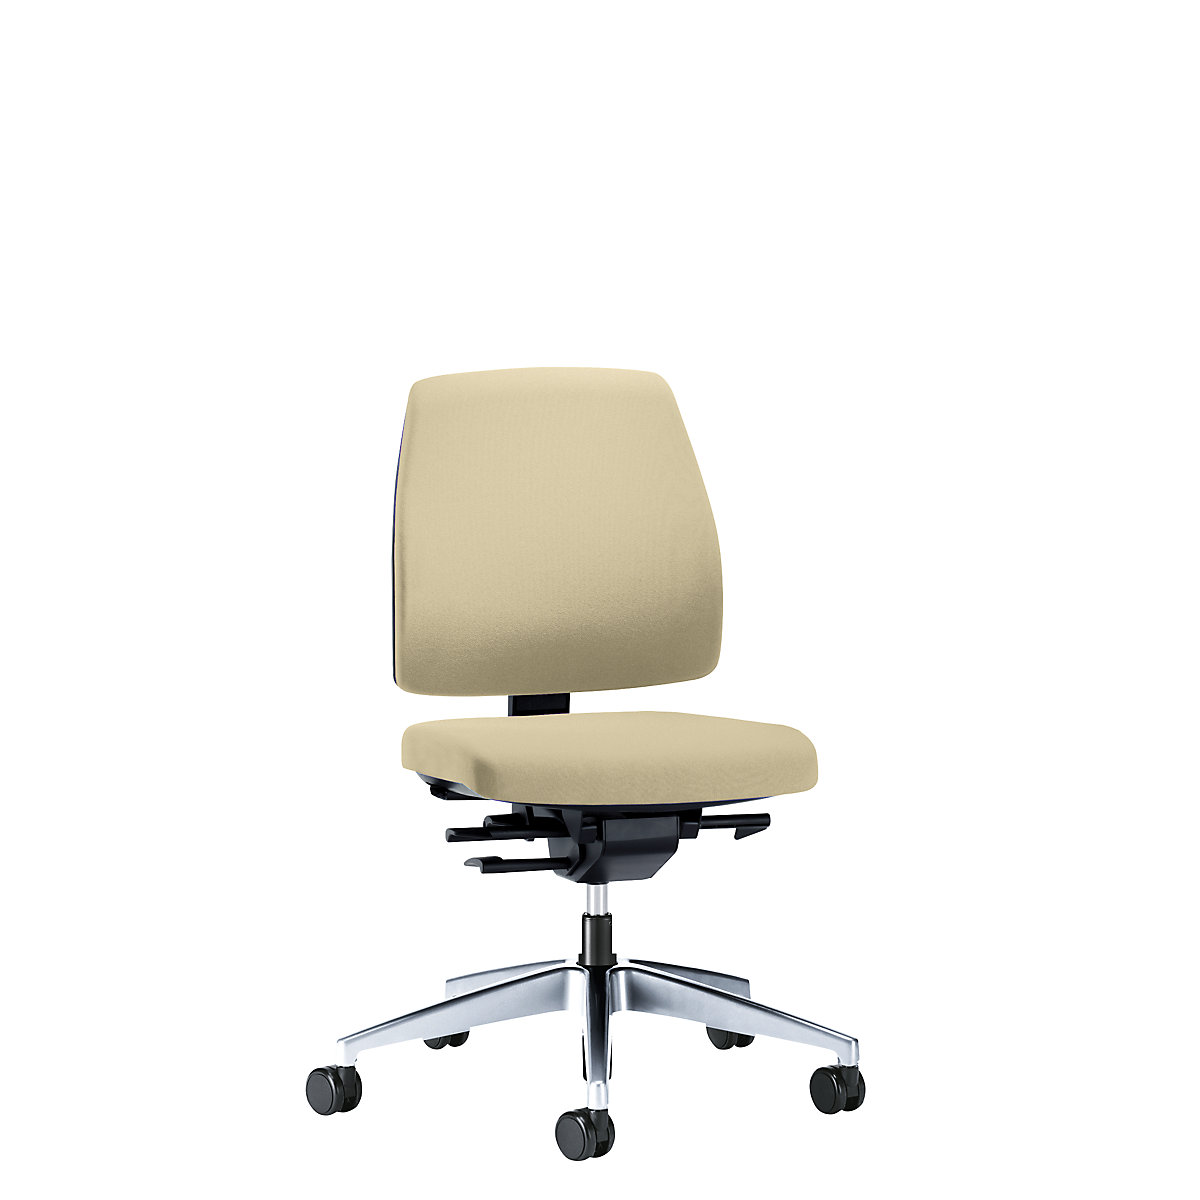 GOAL office swivel chair, back rest height 430 mm – interstuhl, polished frame, with hard castors, beige, seat depth 410 mm-1